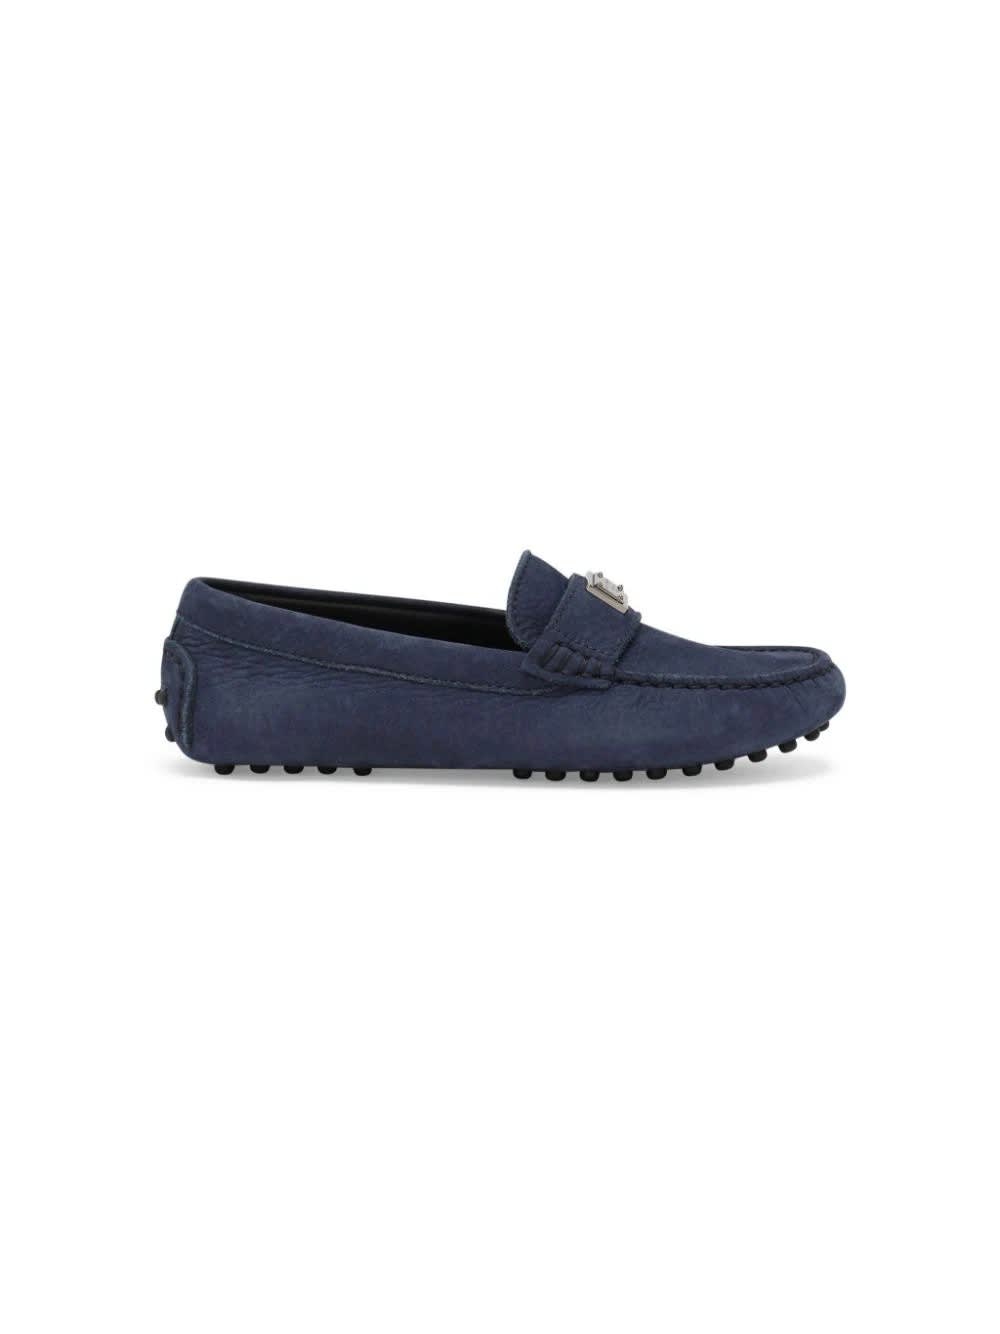 Dolce & Gabbana Blue Nubuck Loafers